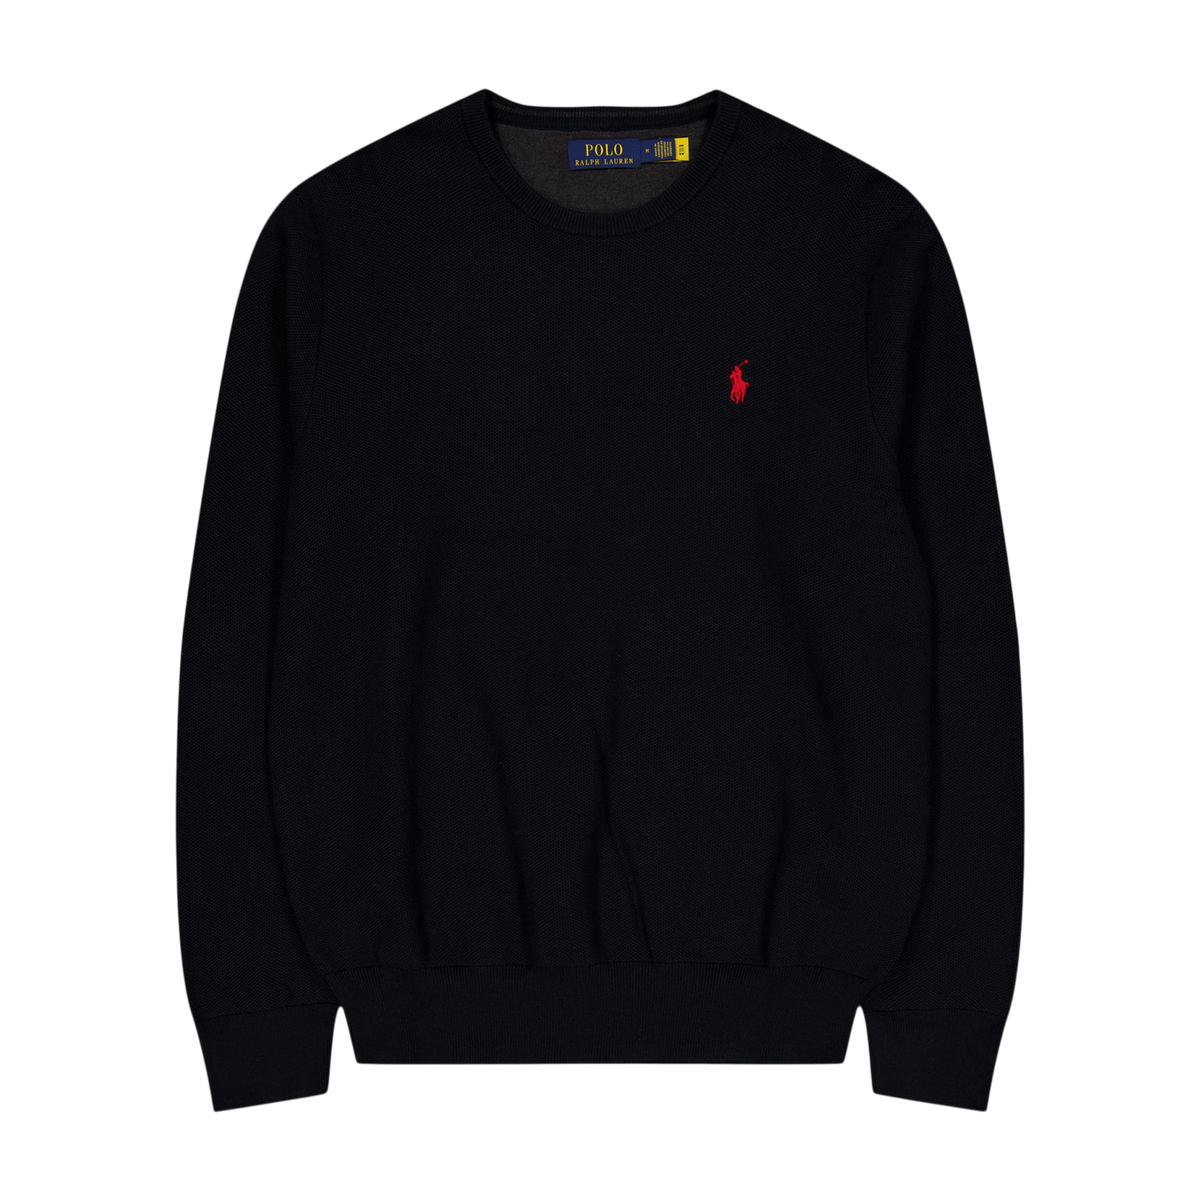 Textured Cotton Crewneck Sweater Polo Black